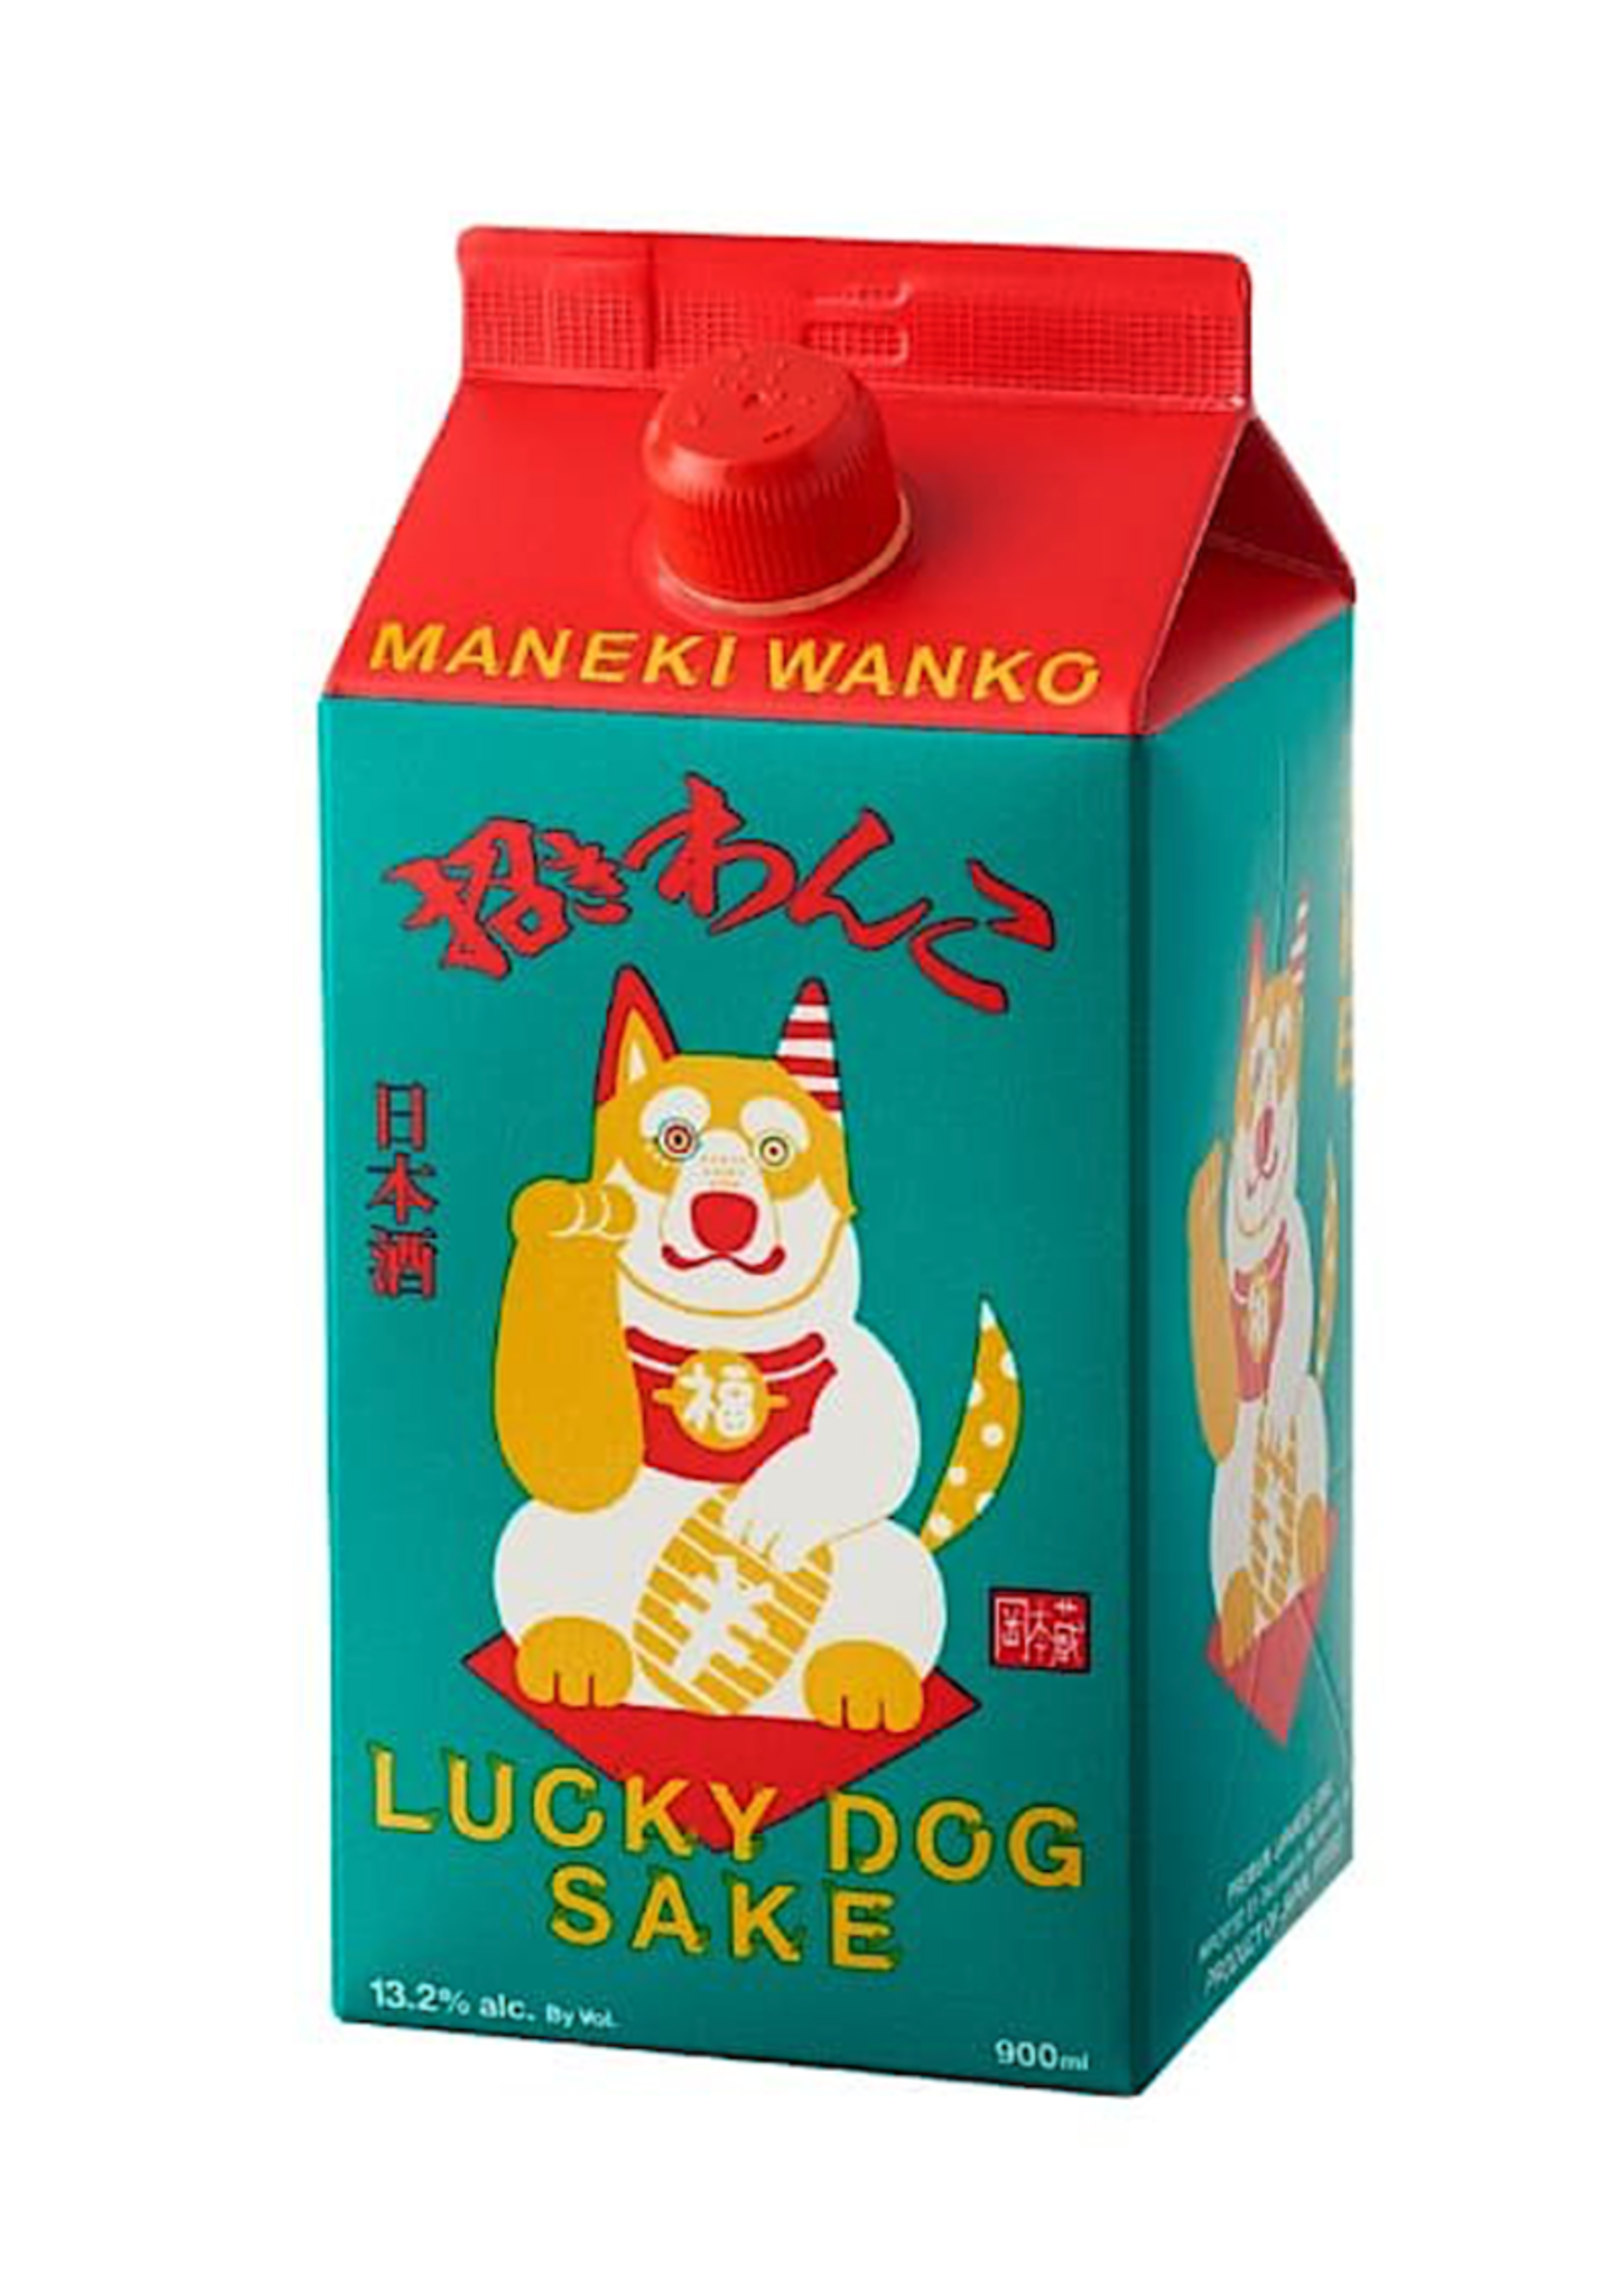 Maneki Wanko Maneki Wanko / Lucky Dog Sake / 900mL